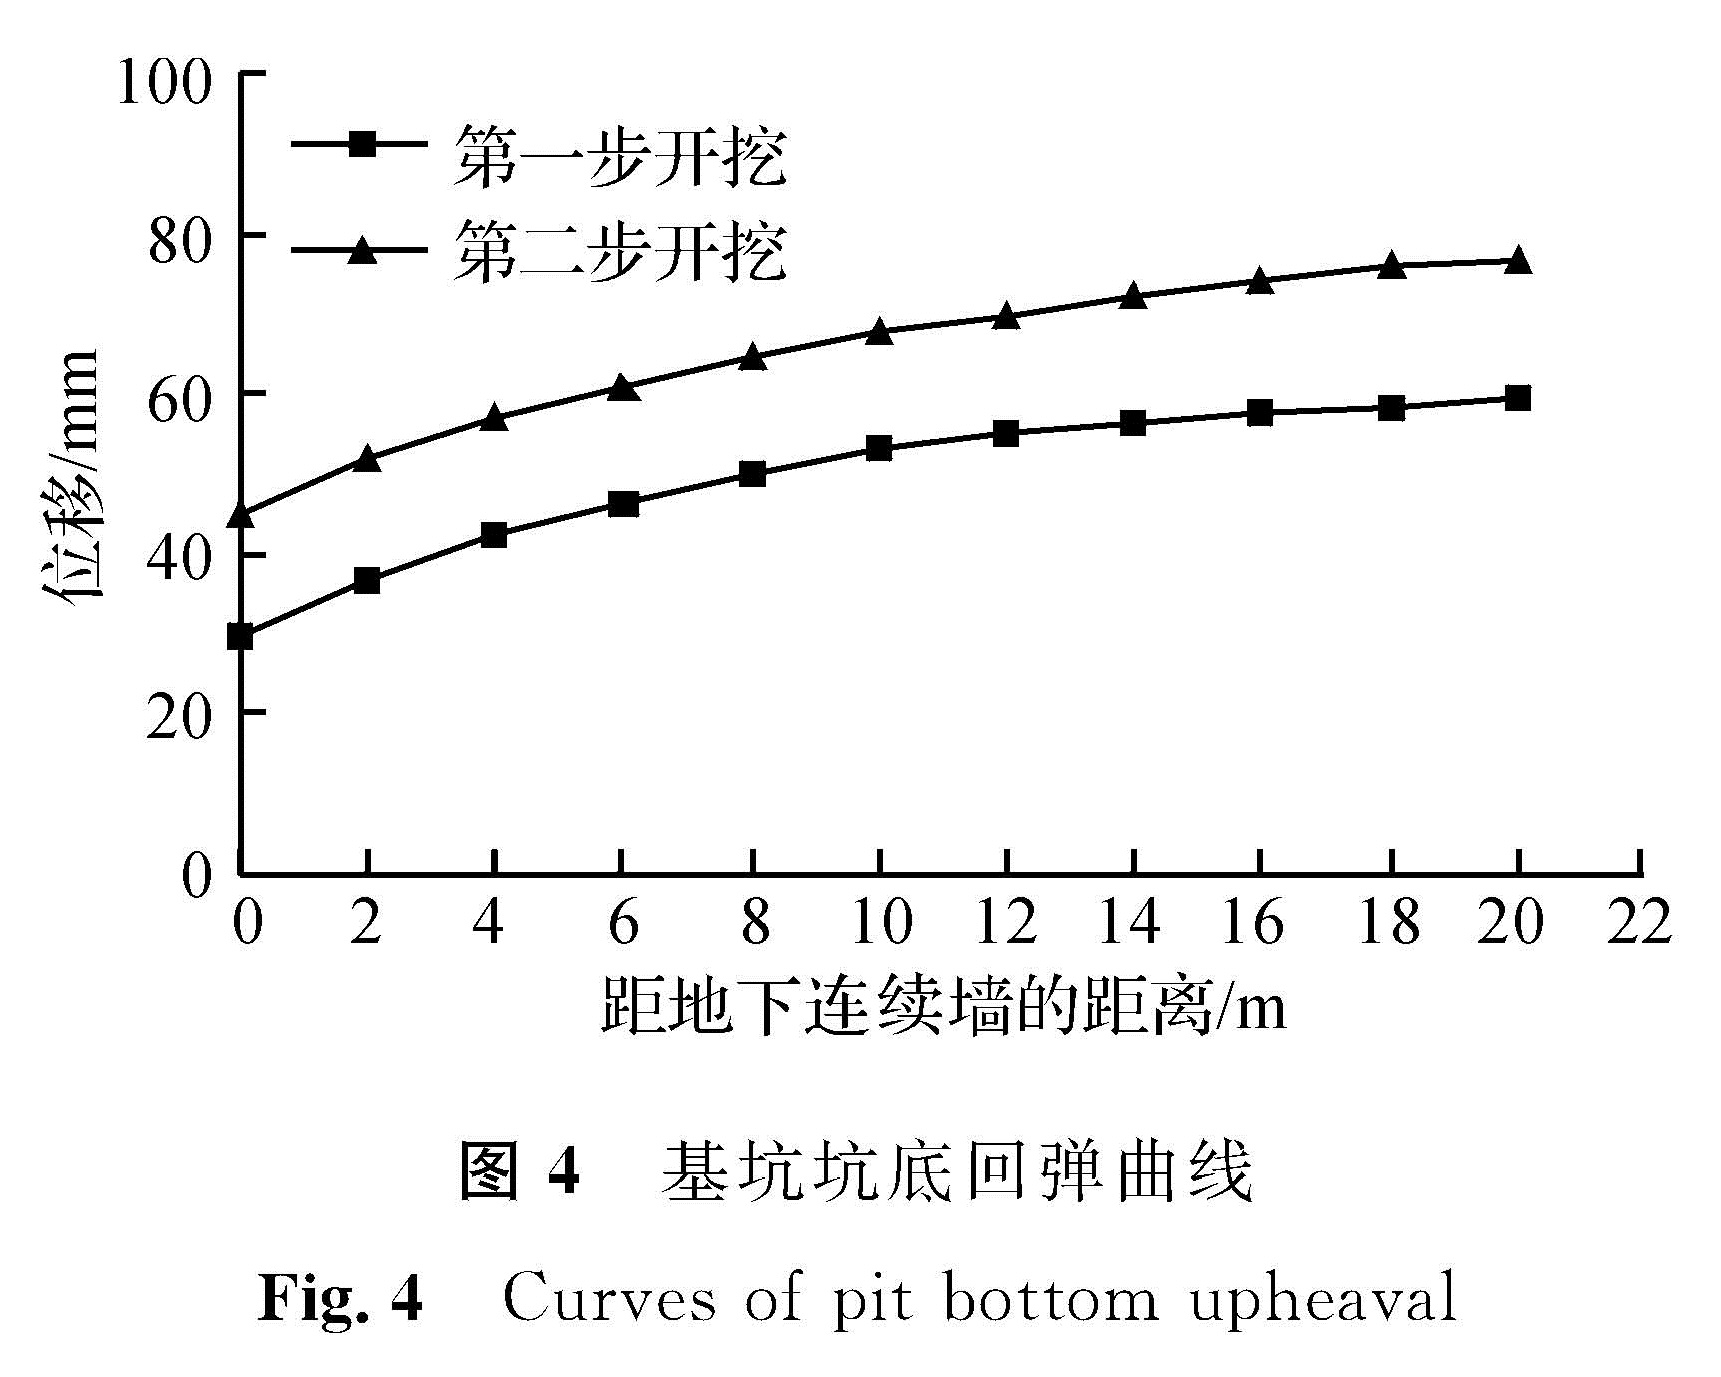 图4 基坑坑底回弹曲线<br/>Fig.4 Curves of pit bottom upheaval